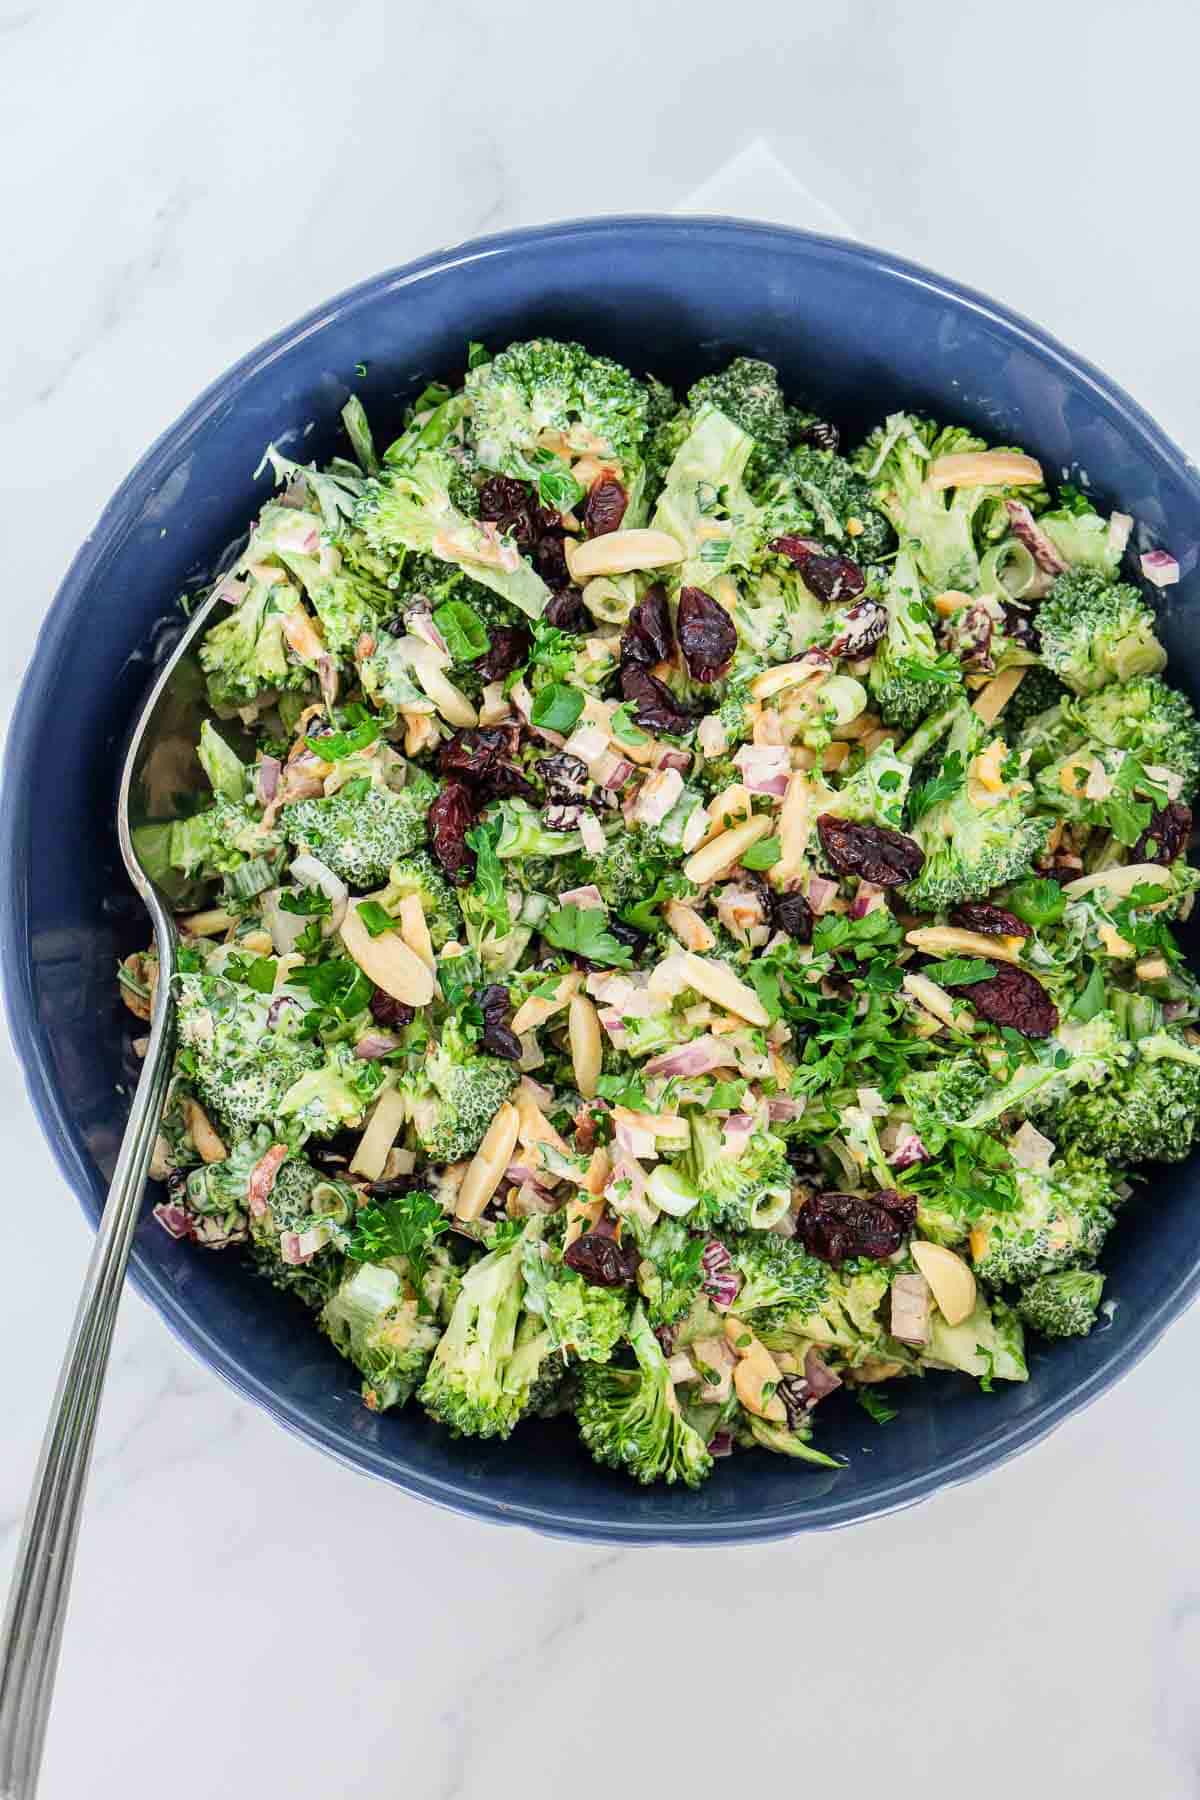 Creamy vegan broccoli salad with cranberries.